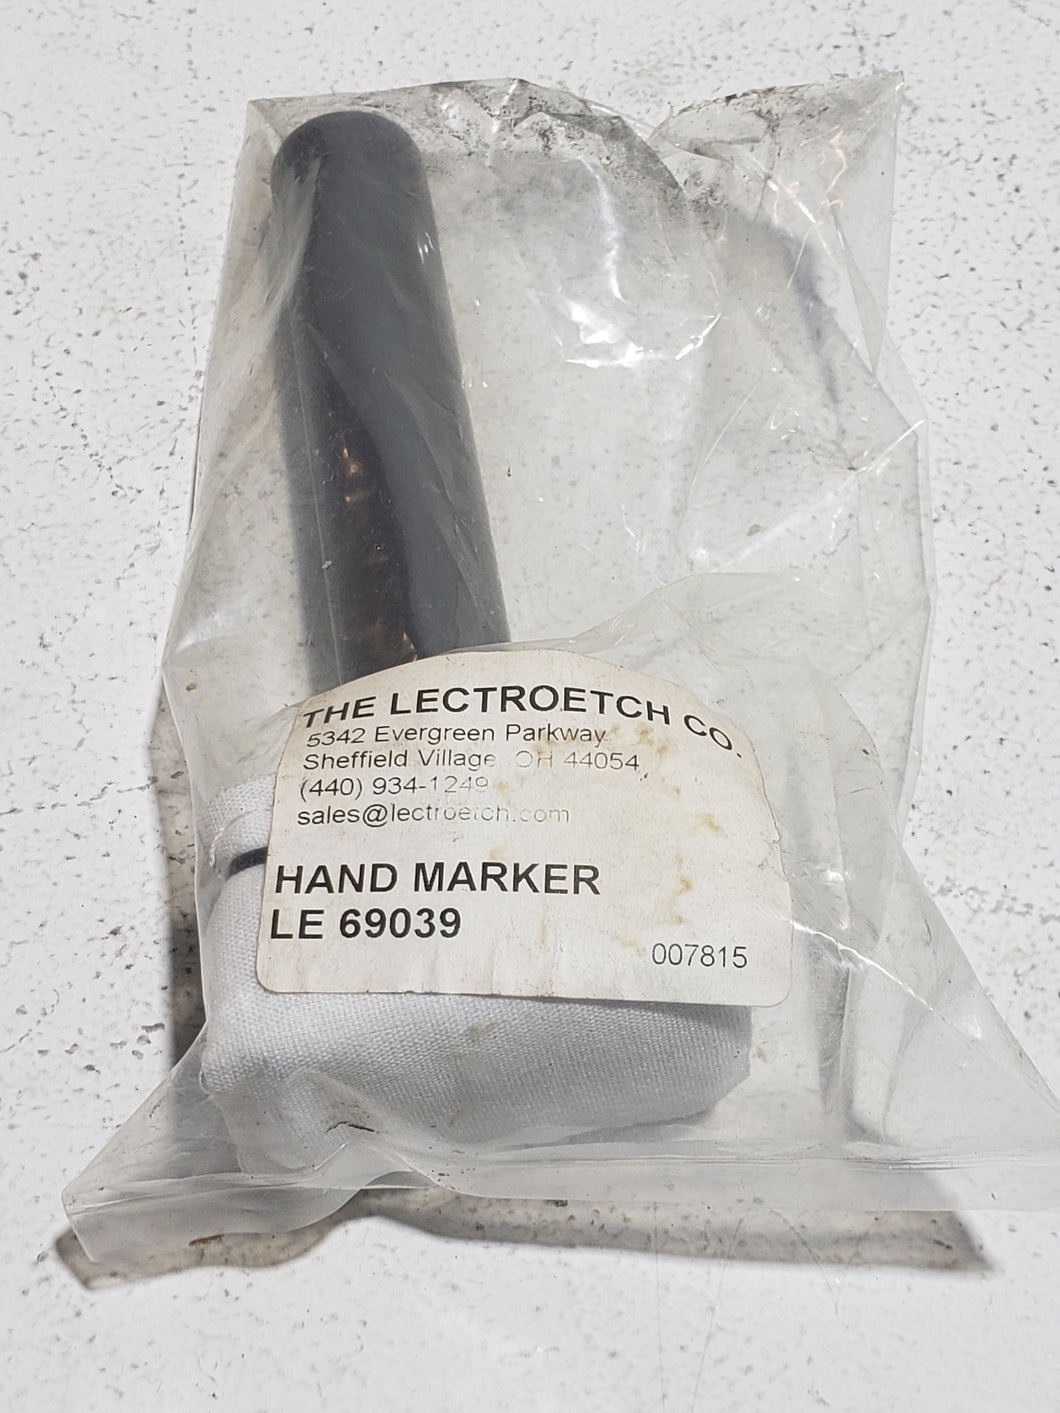 Lectroetch Carbon Marking Head - Hand Marker Design 007815 -LE69039 - FreemanLiquidators